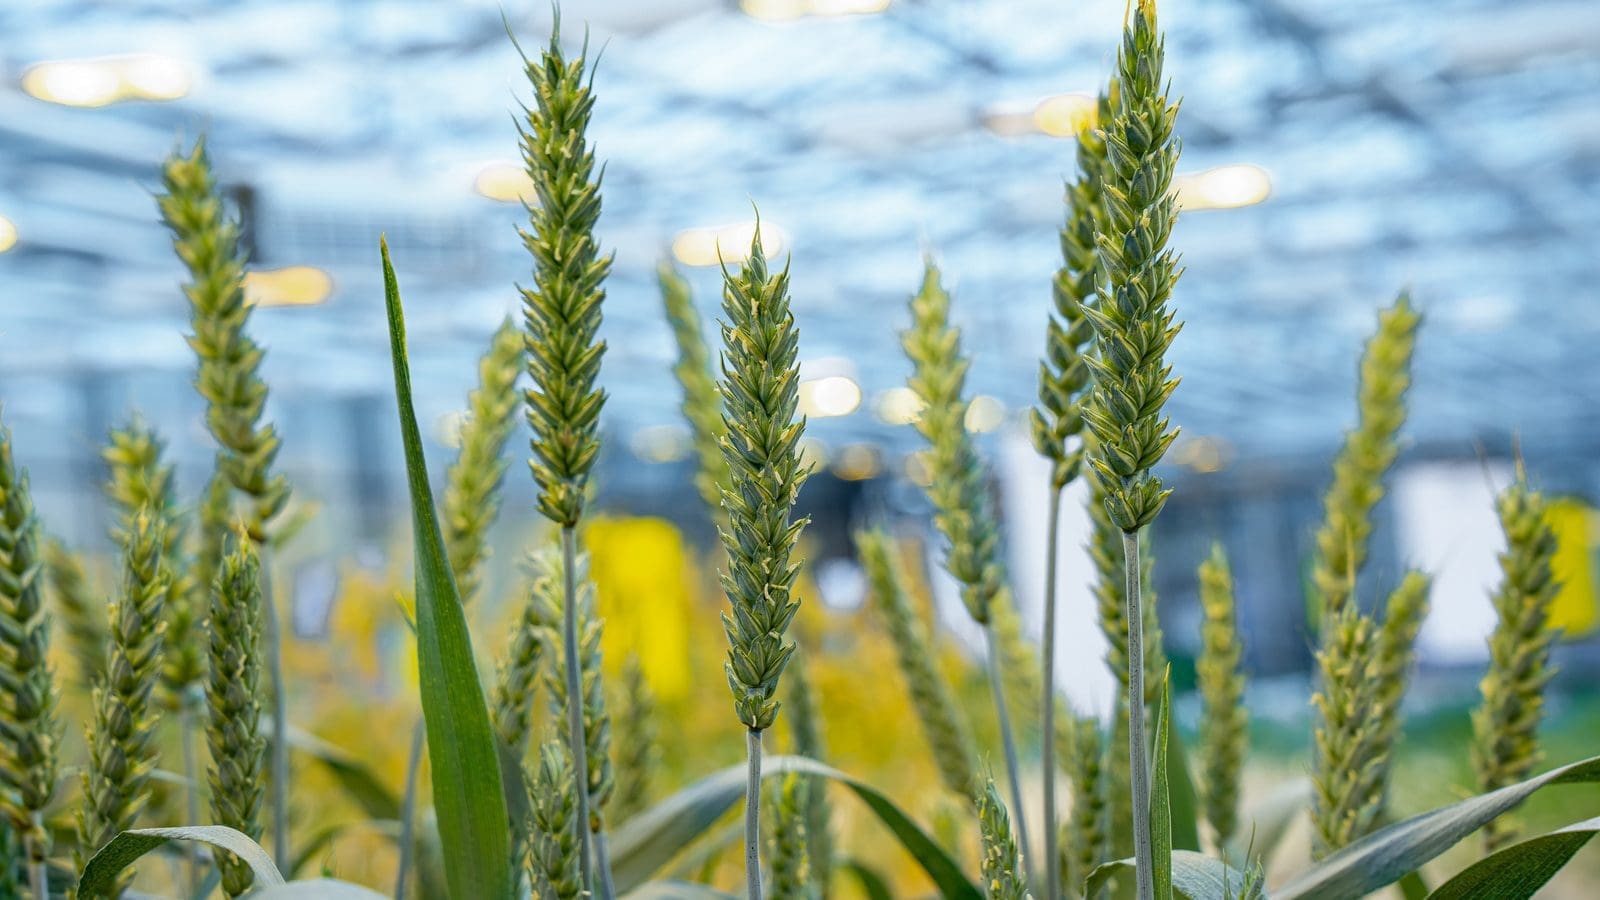 Nestlé U.S. to facilitate regenerative agriculture within its DiGiorno wheat supply chain